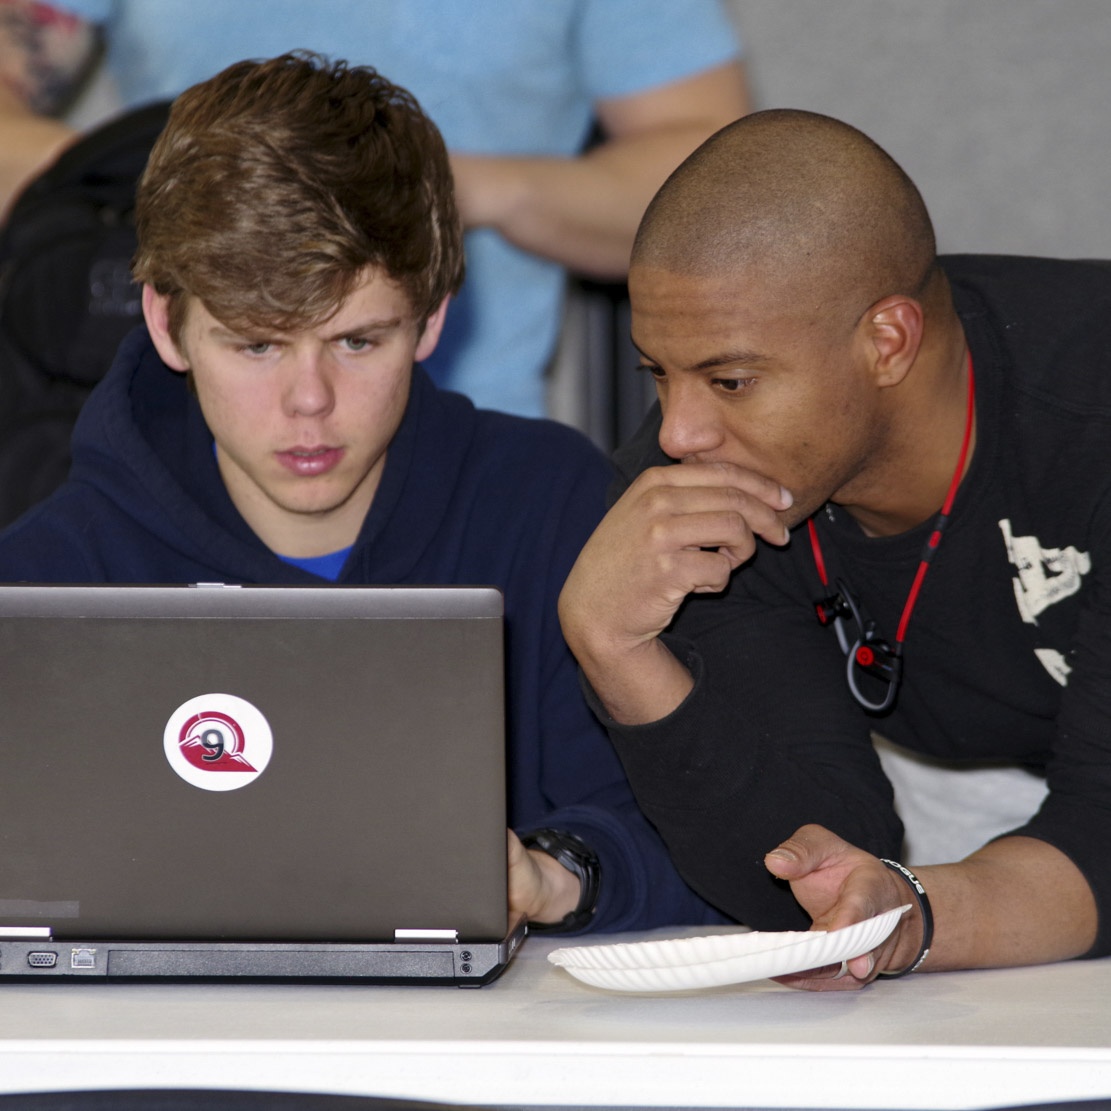 Students looking at a computer